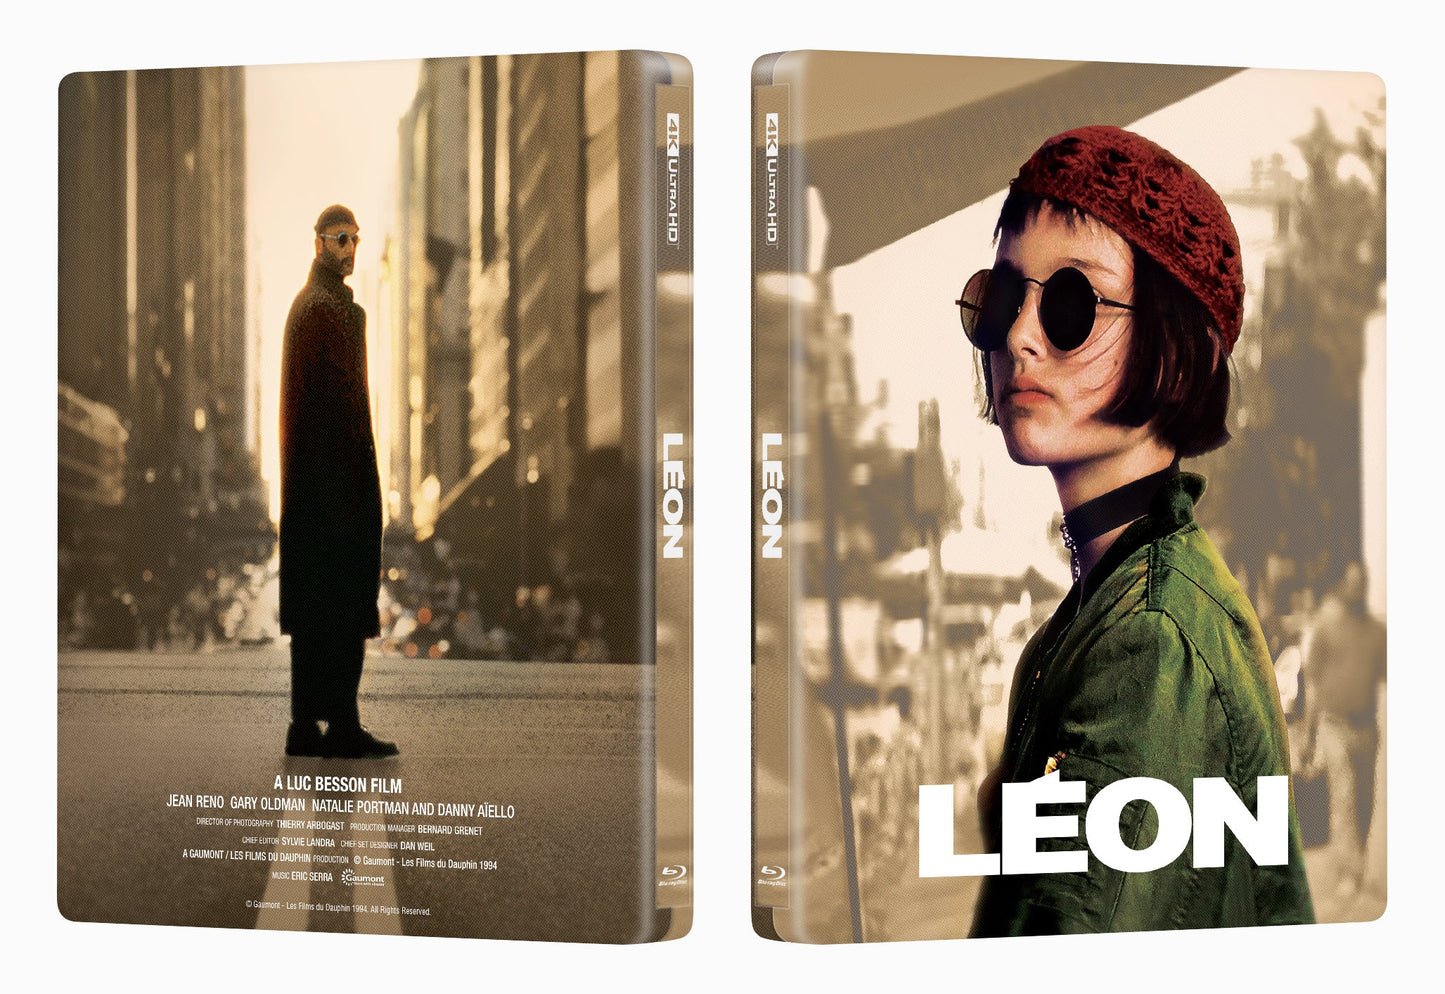 Leon 4K Blu-ray Steelbook Manta Lab Exclusive ME#57 Double Lenticular Slip